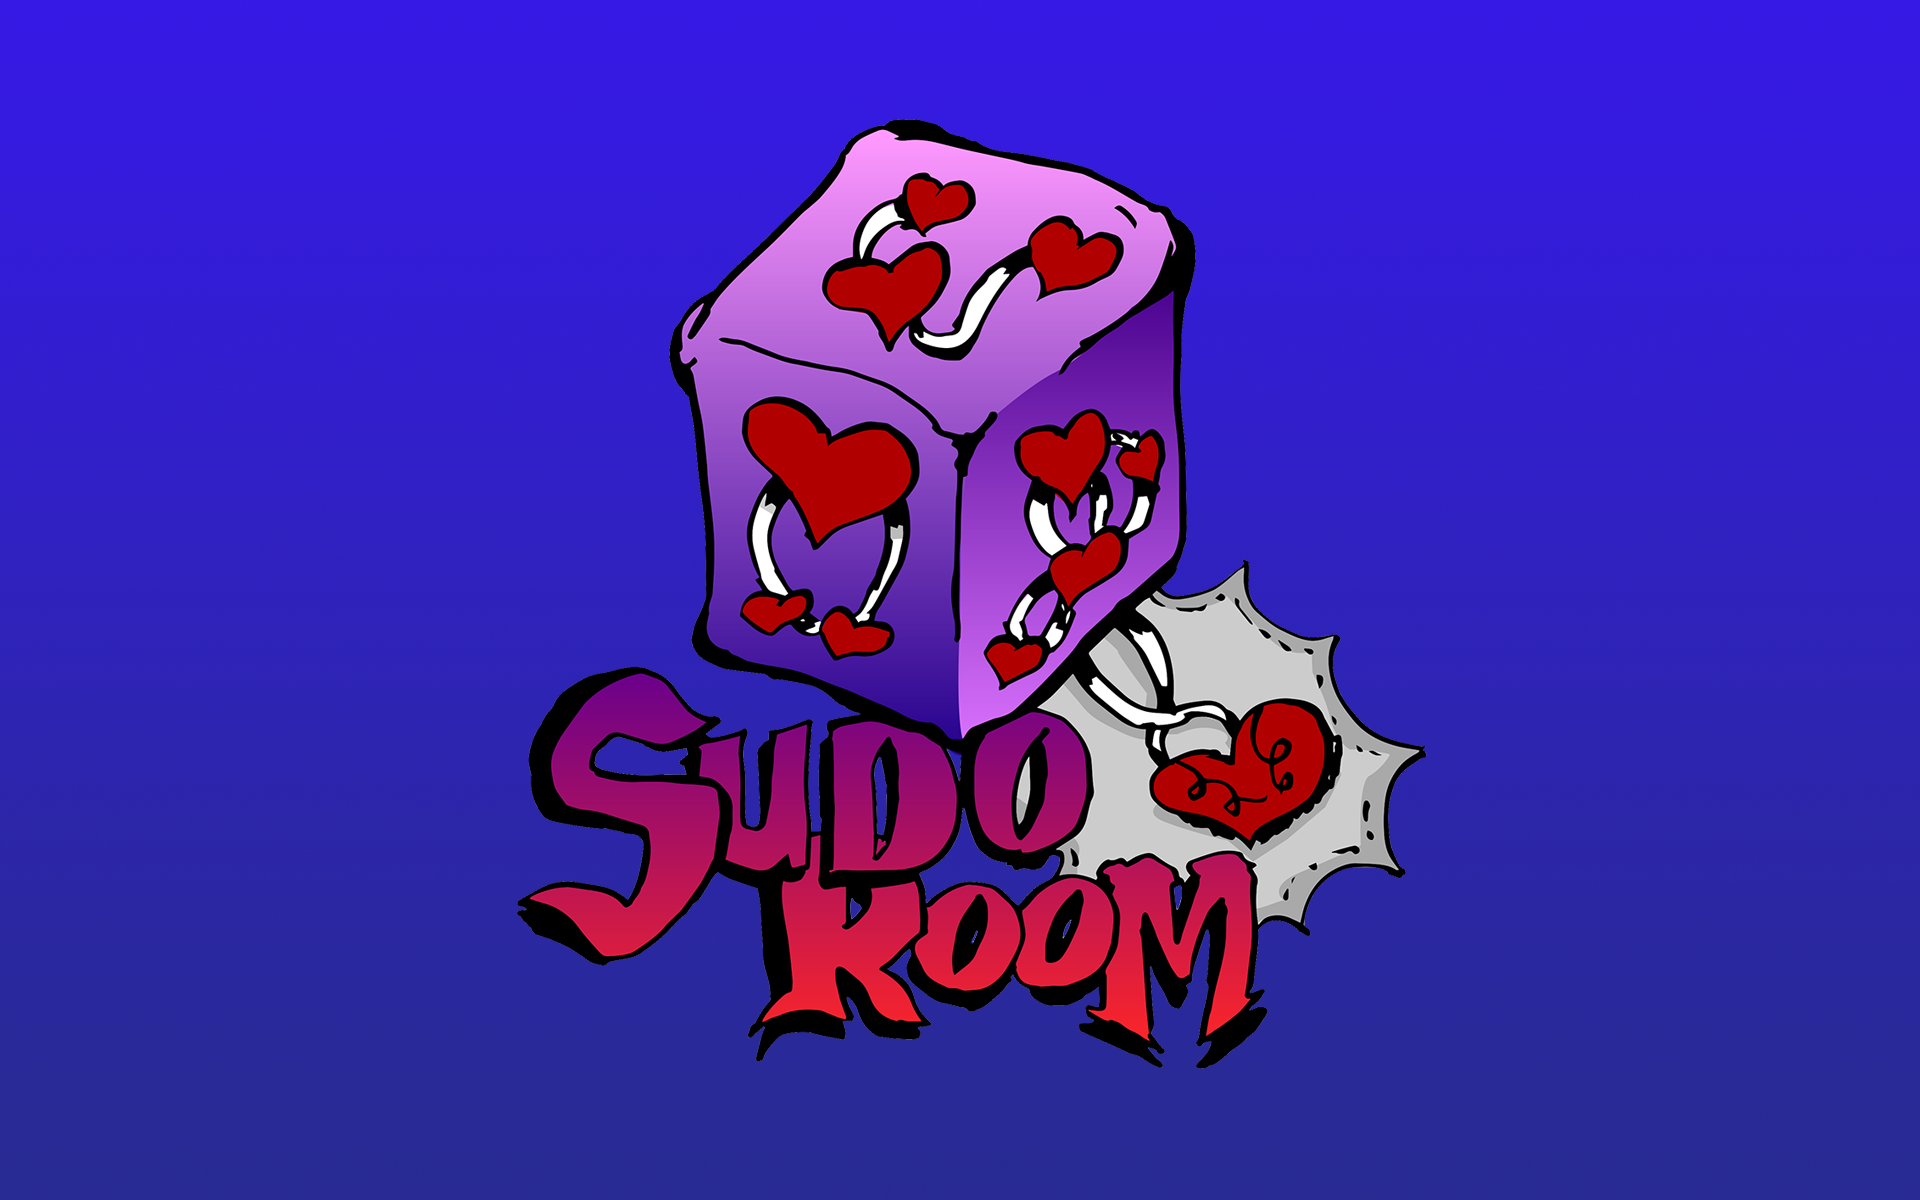 SudoRoom Wallpaper - Love Cube.png